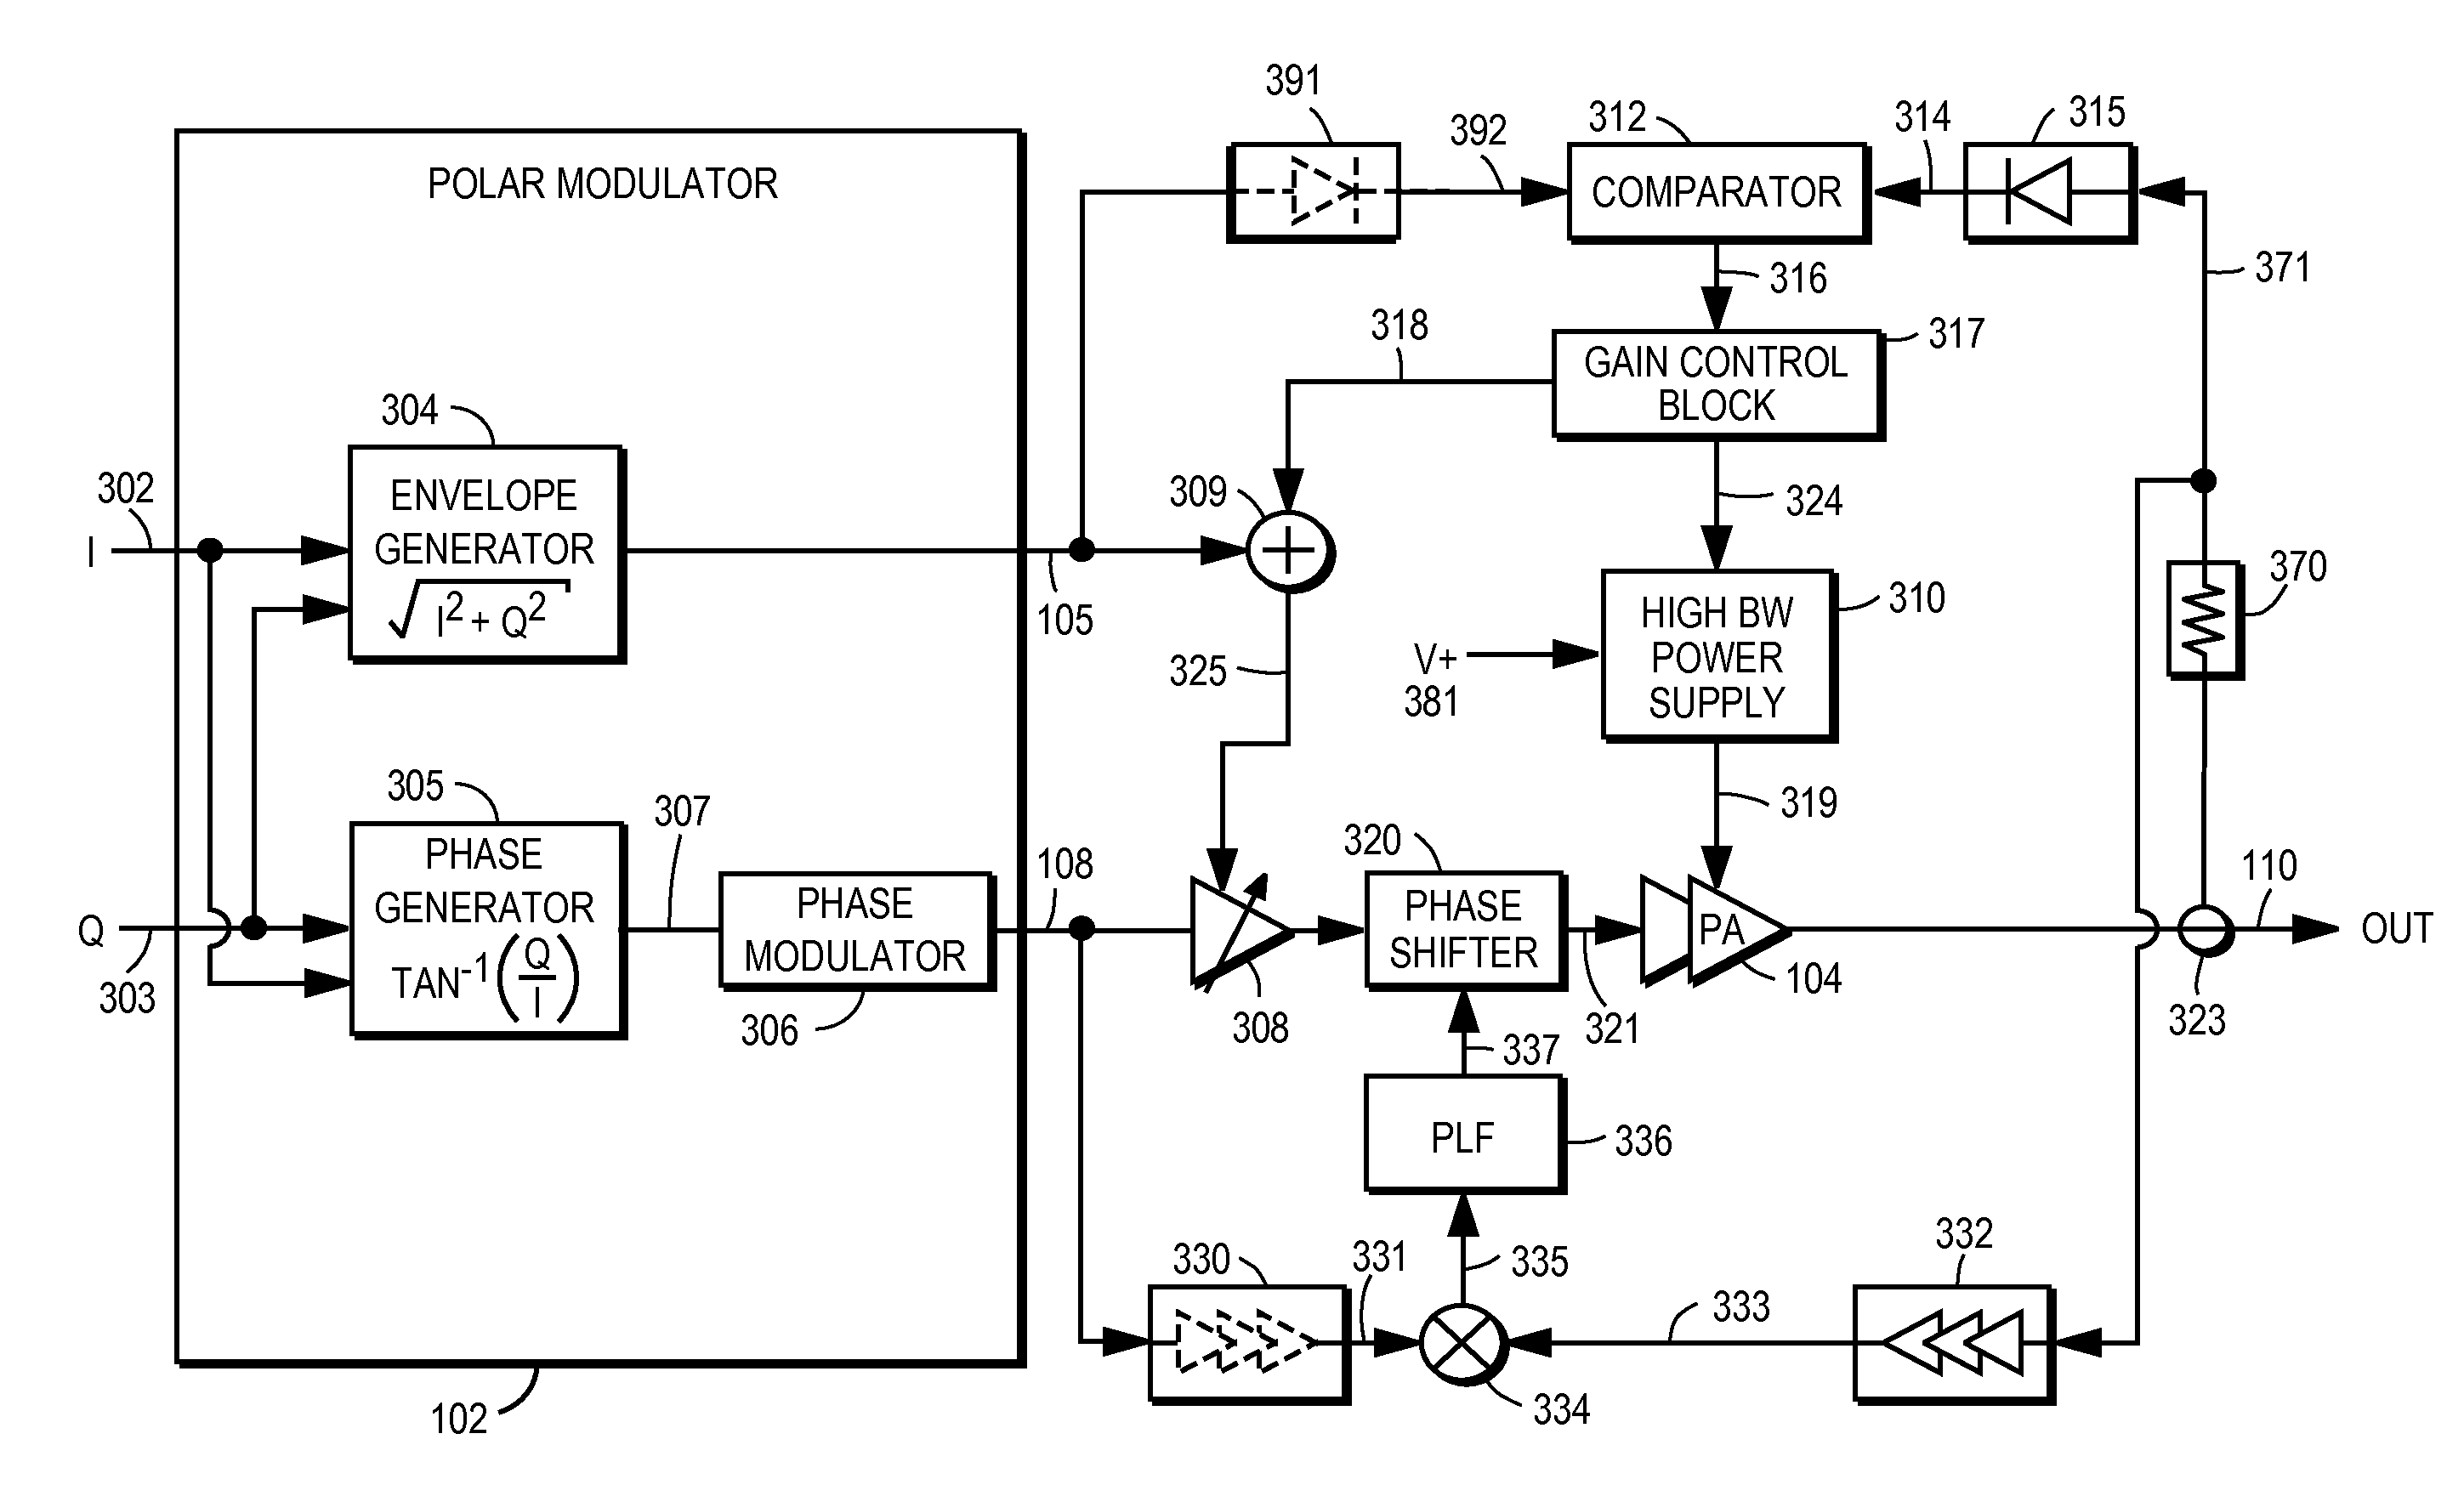 Power Amplifier Controller With Polar Transmitter